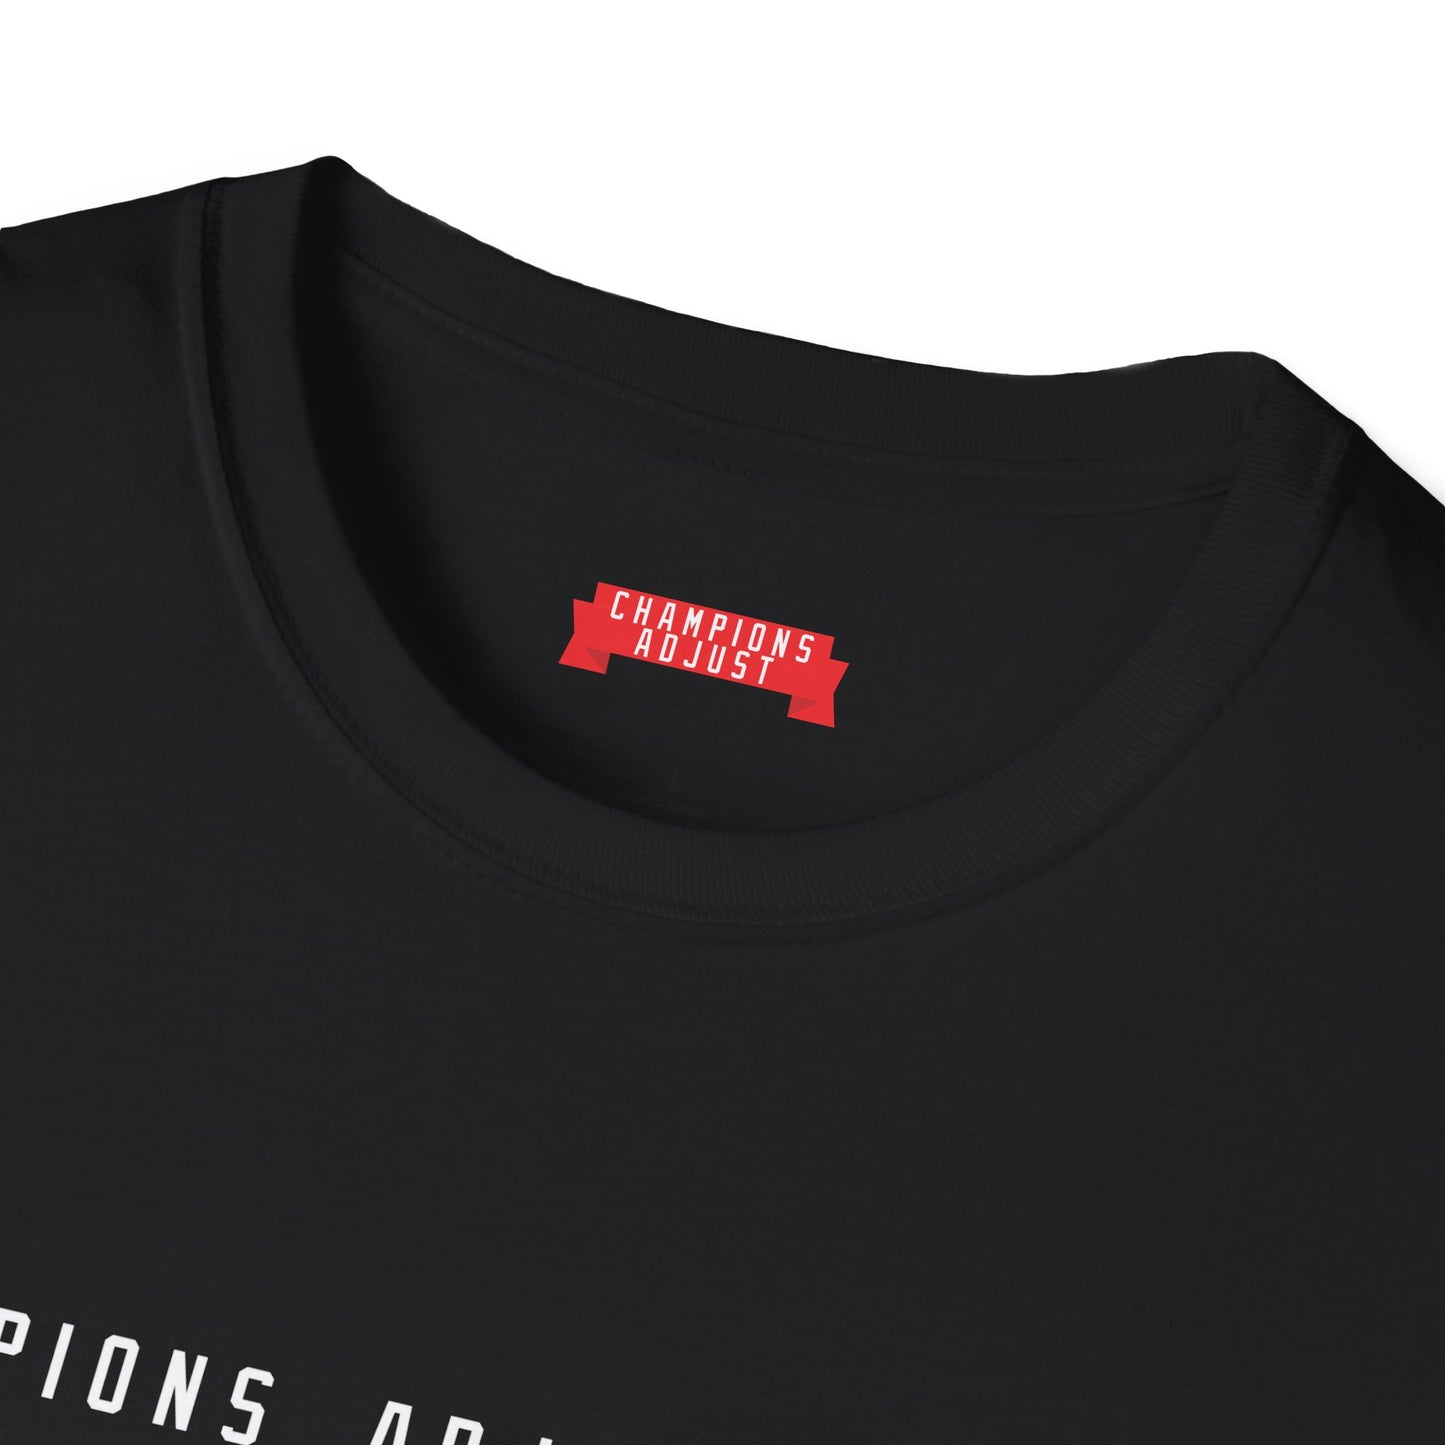 Champions Adjust Mindset T-Shirt (Black)